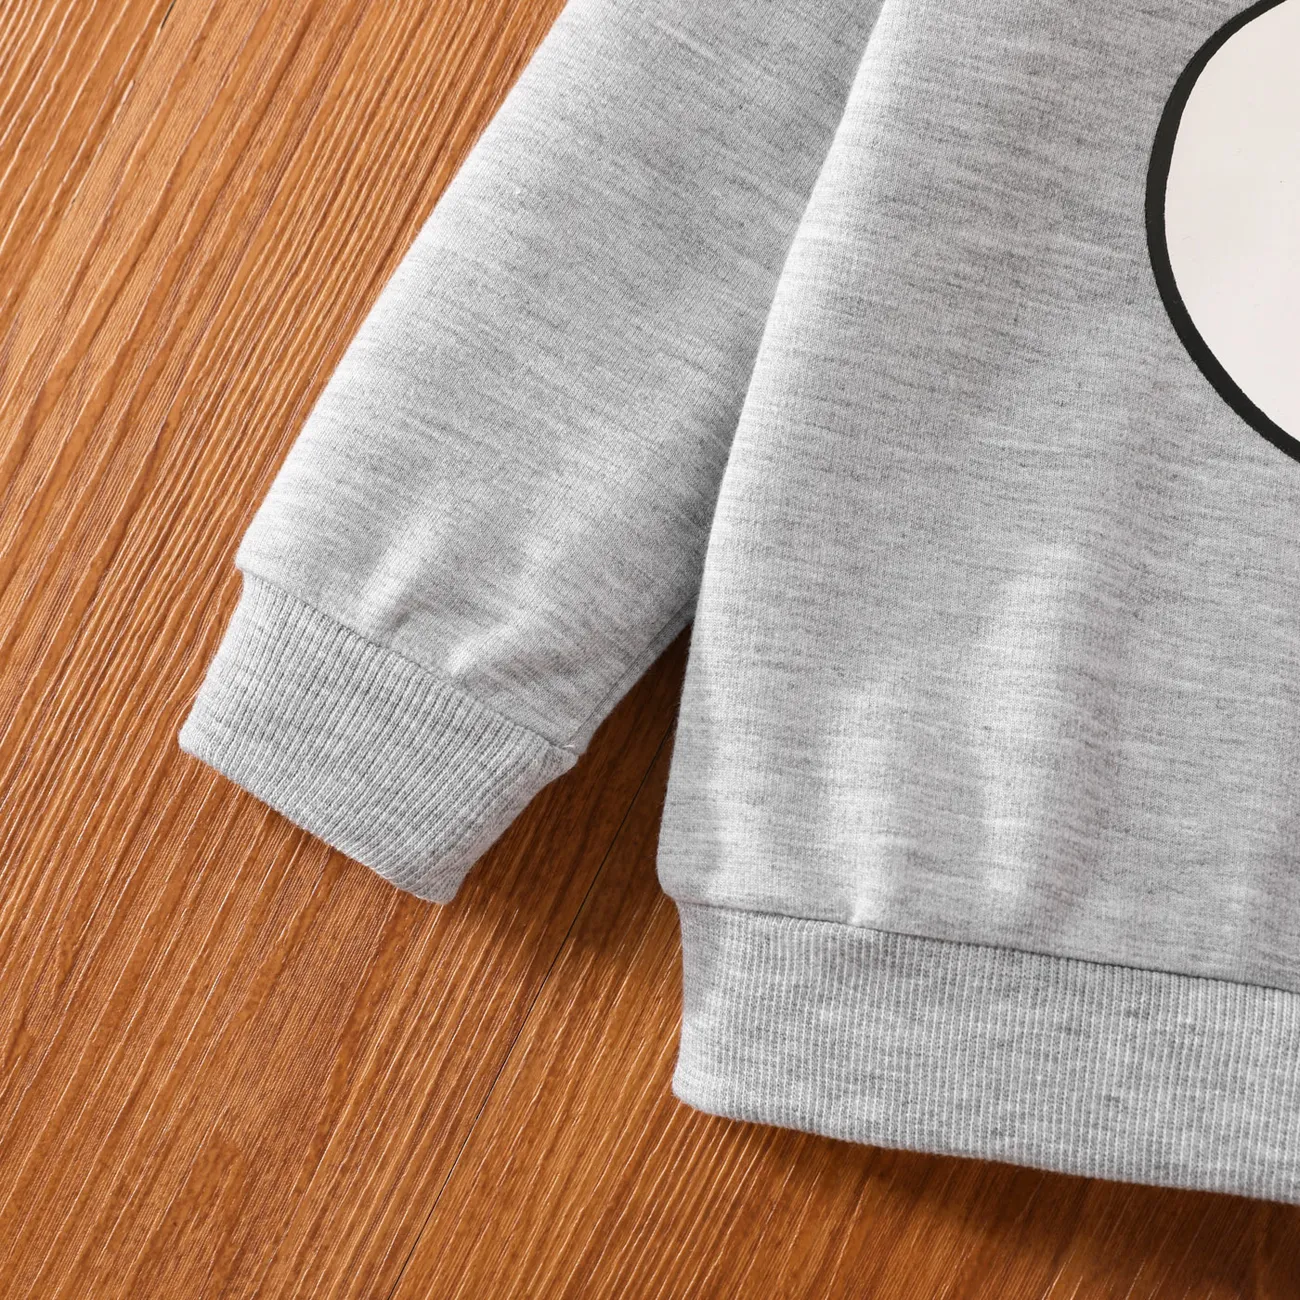 2-piece Toddler Boy/Girl Eye Print Pullover Sweatshirt and Pants Casual Set Grey big image 1